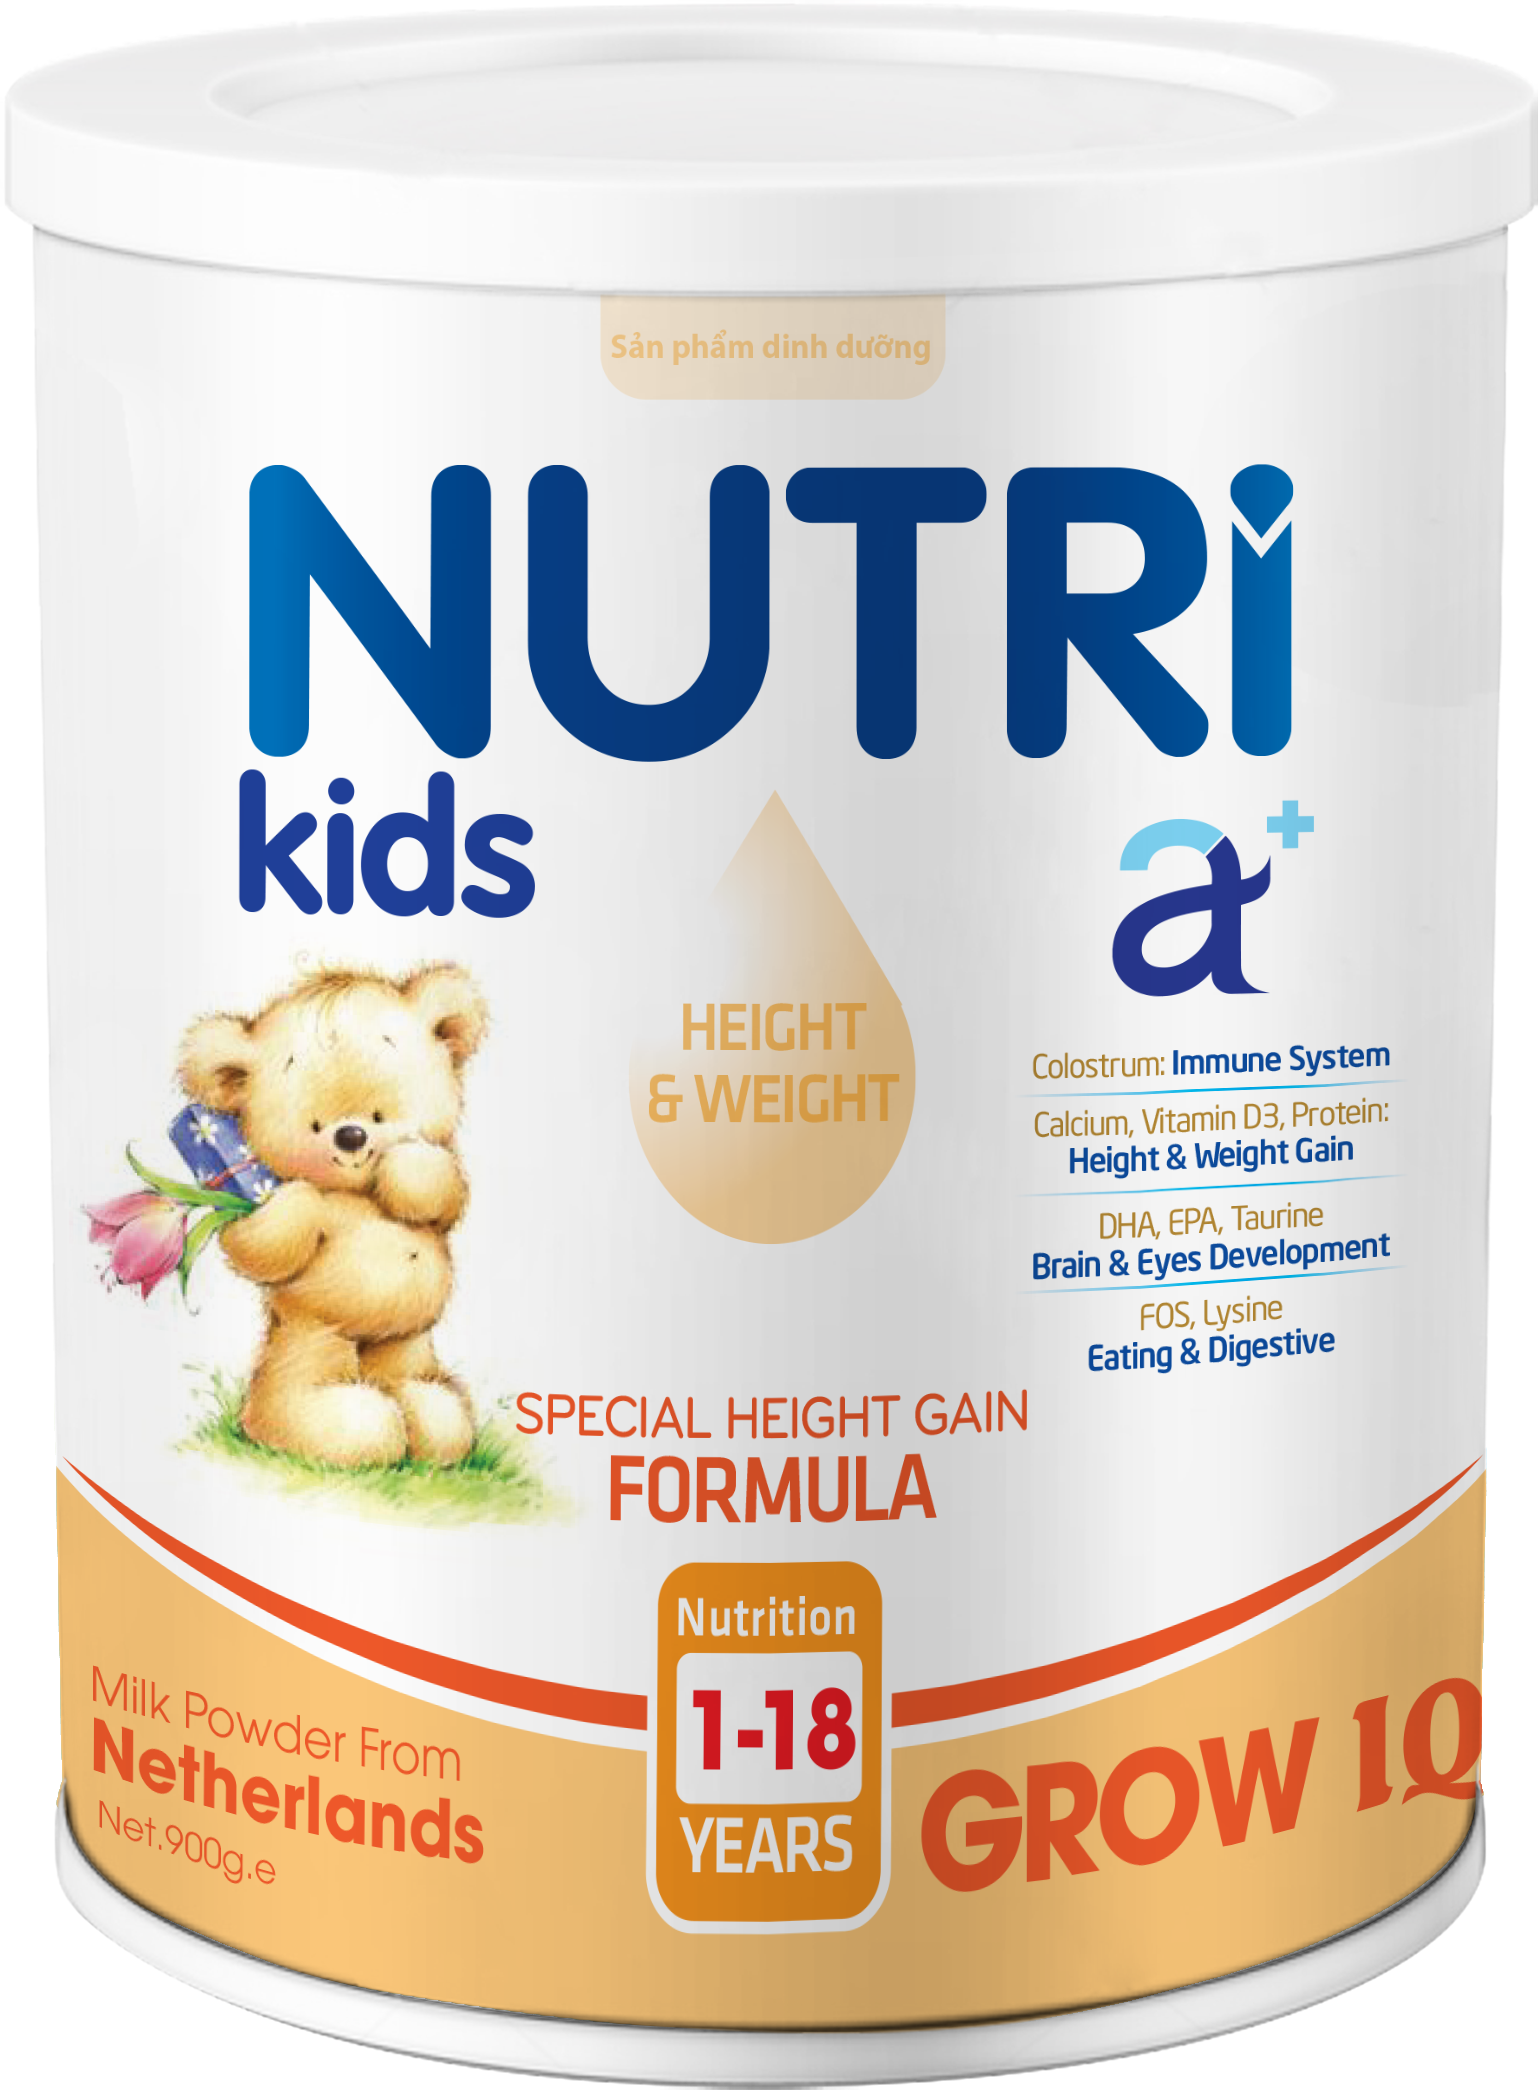 NUTRI KIDS A+ GROW IQ 900g